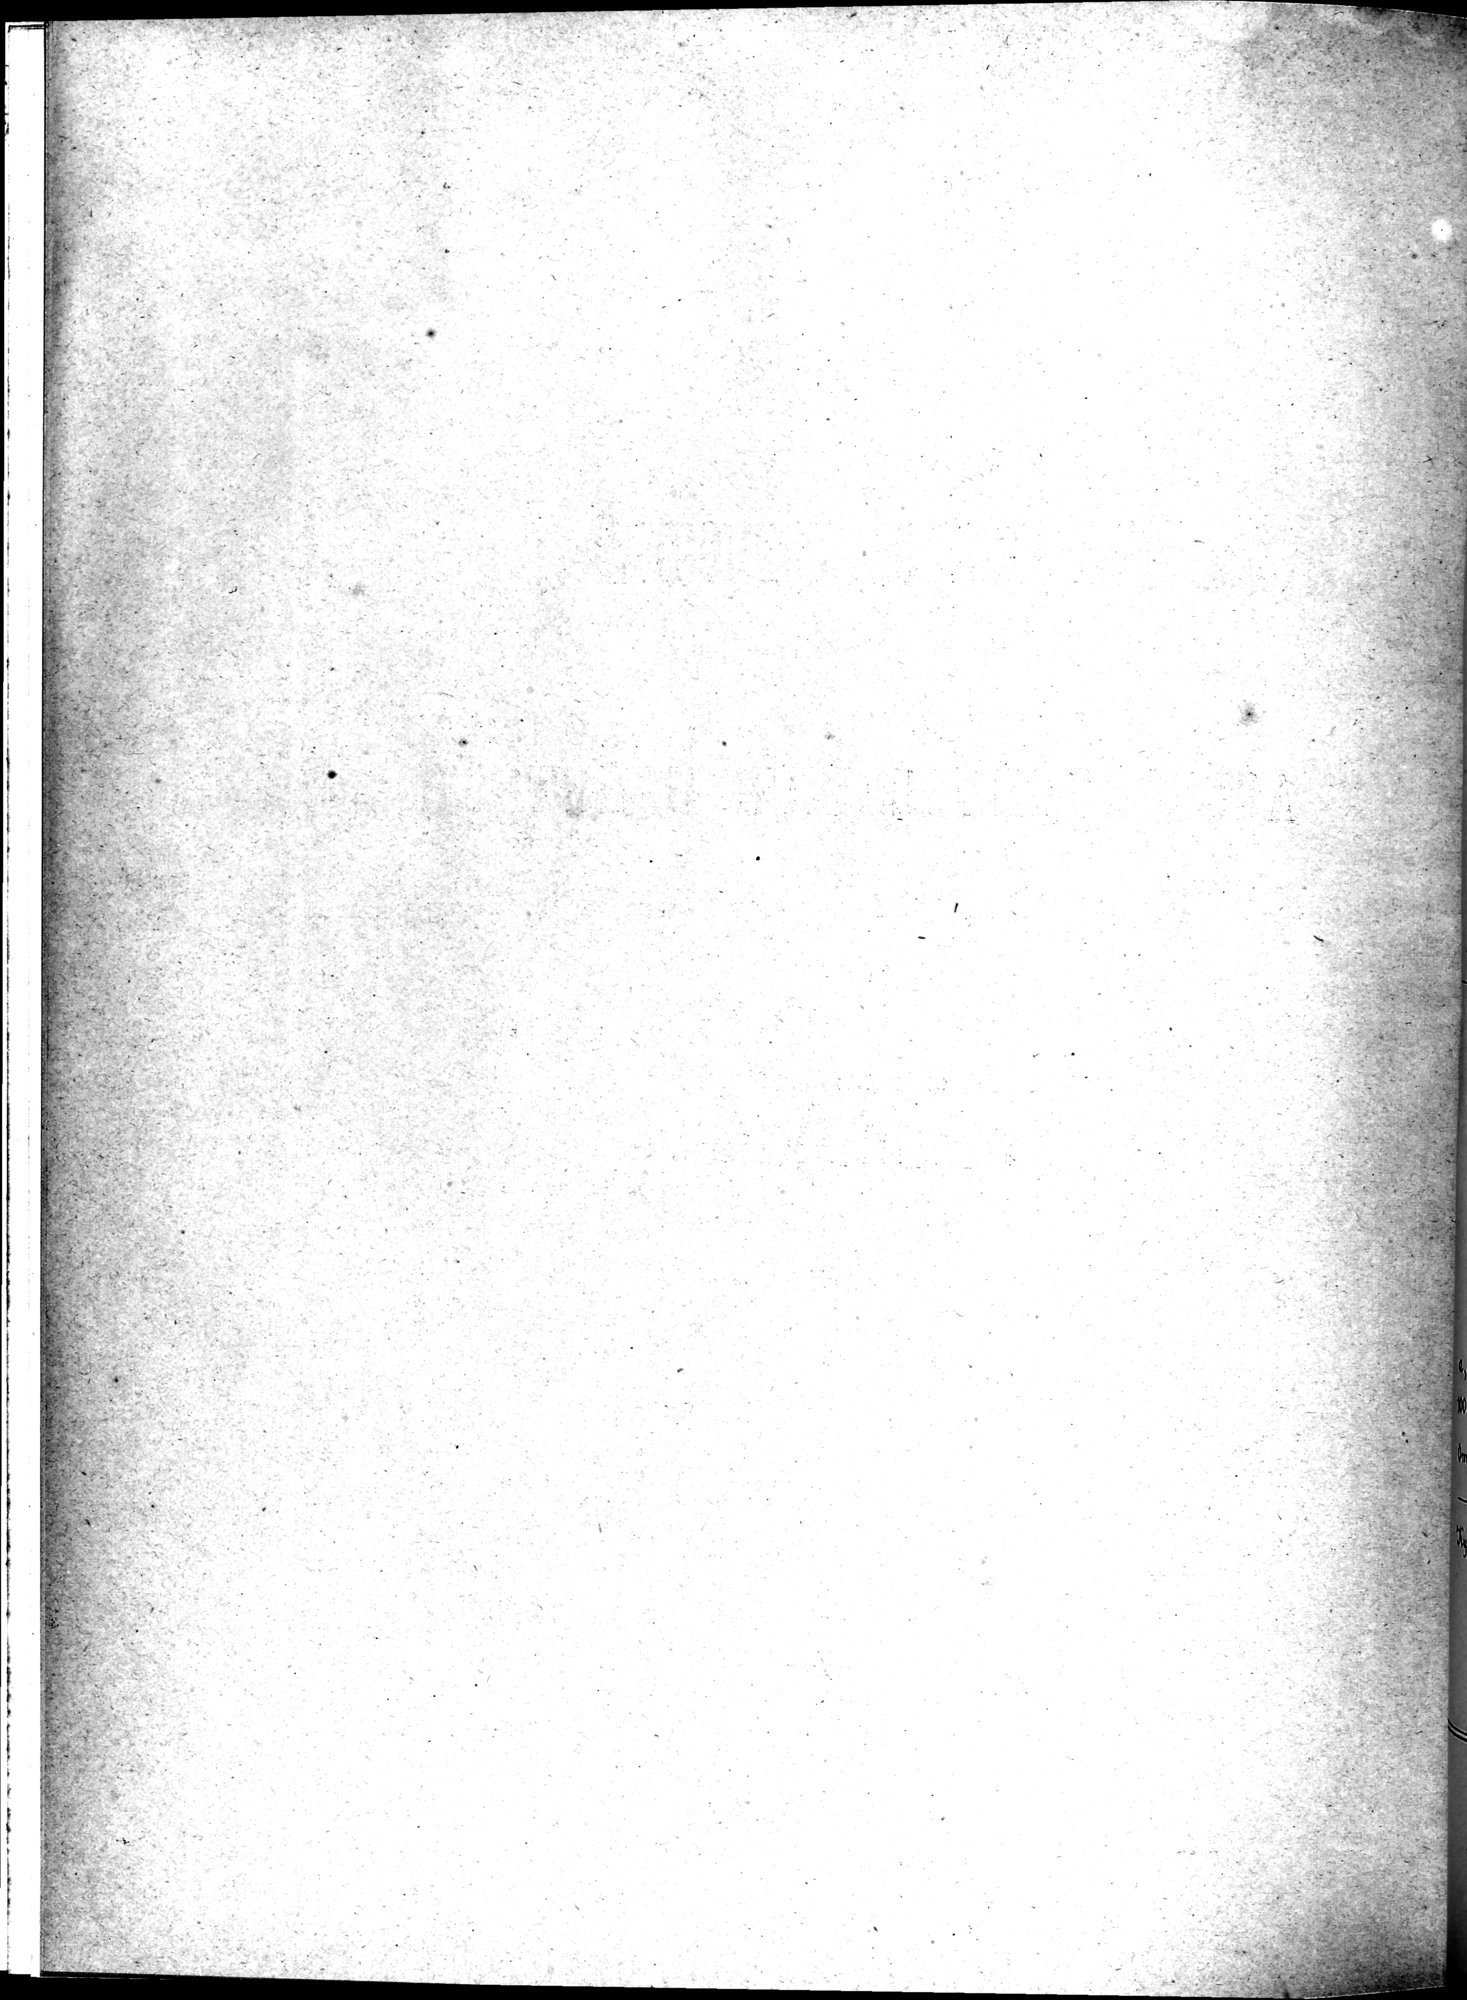 Mongoliia i Kam : vol.4 / Page 22 (Grayscale High Resolution Image)